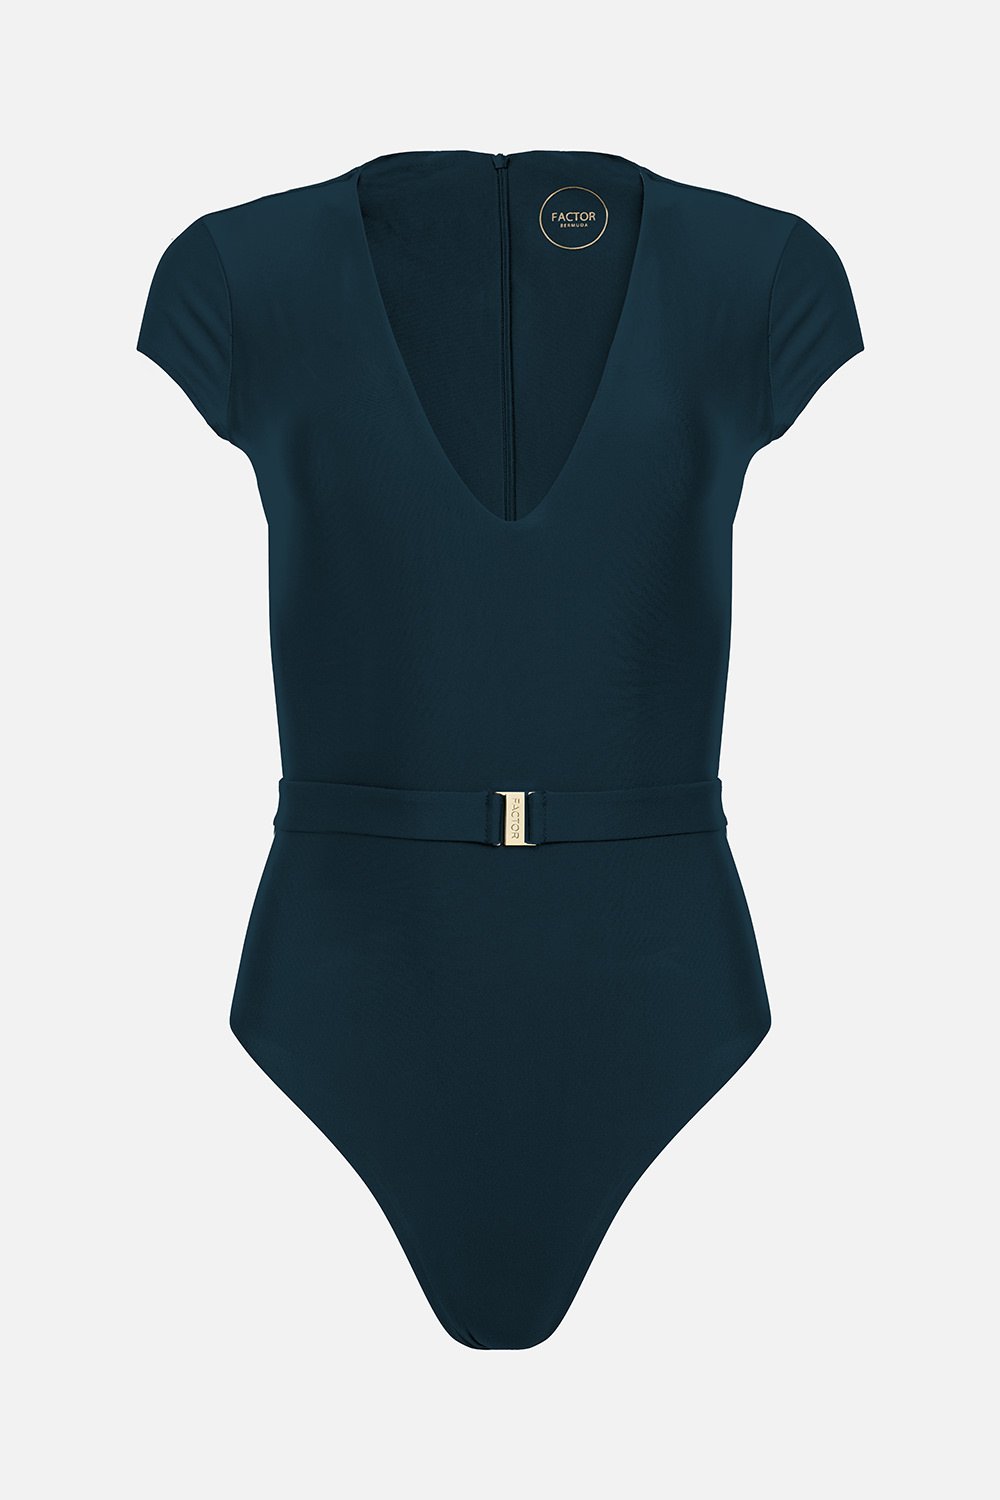 The Plunge Silhouette Swimsuit in Palm - Cassea Swim